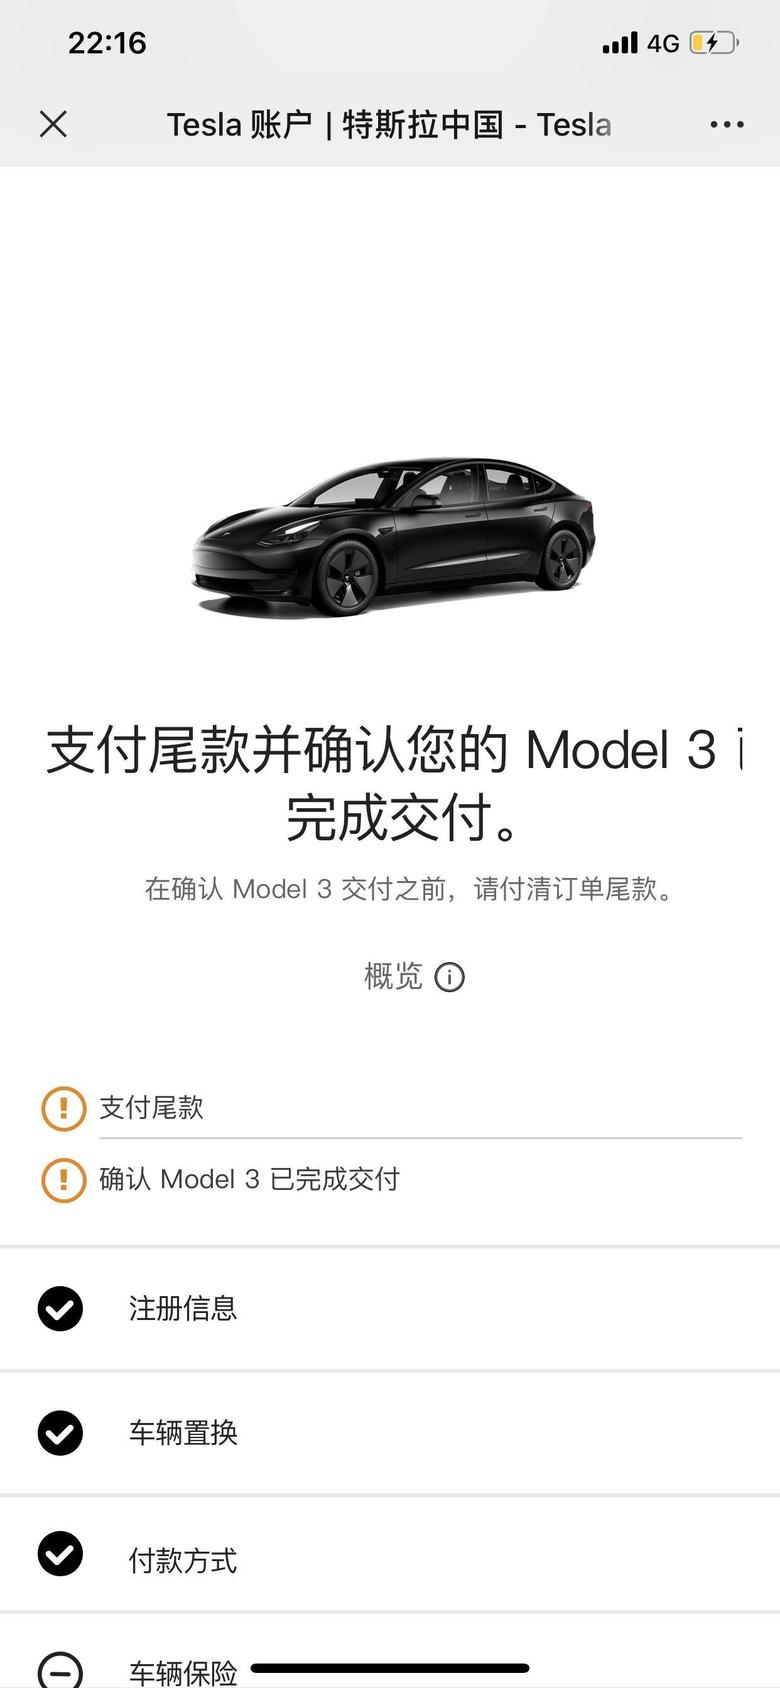 model 3 广东的刚匹配上马上就能提车想问问能转让吗